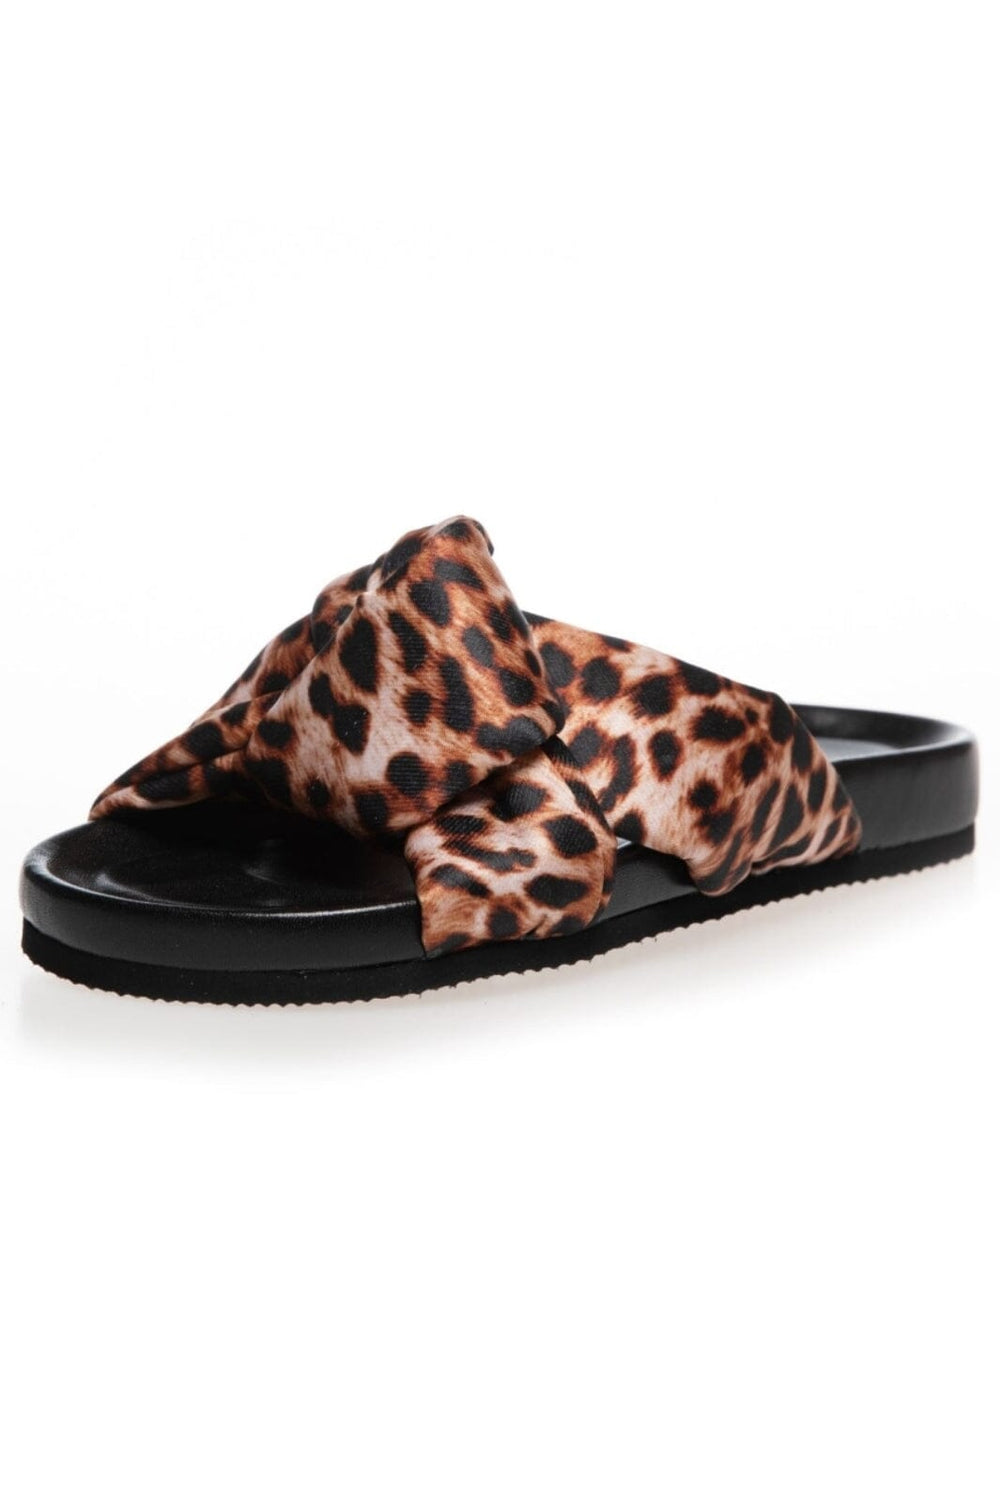 Copenhagen Shoes - Be Like Me - 020 Brown Leopard Sandaler 